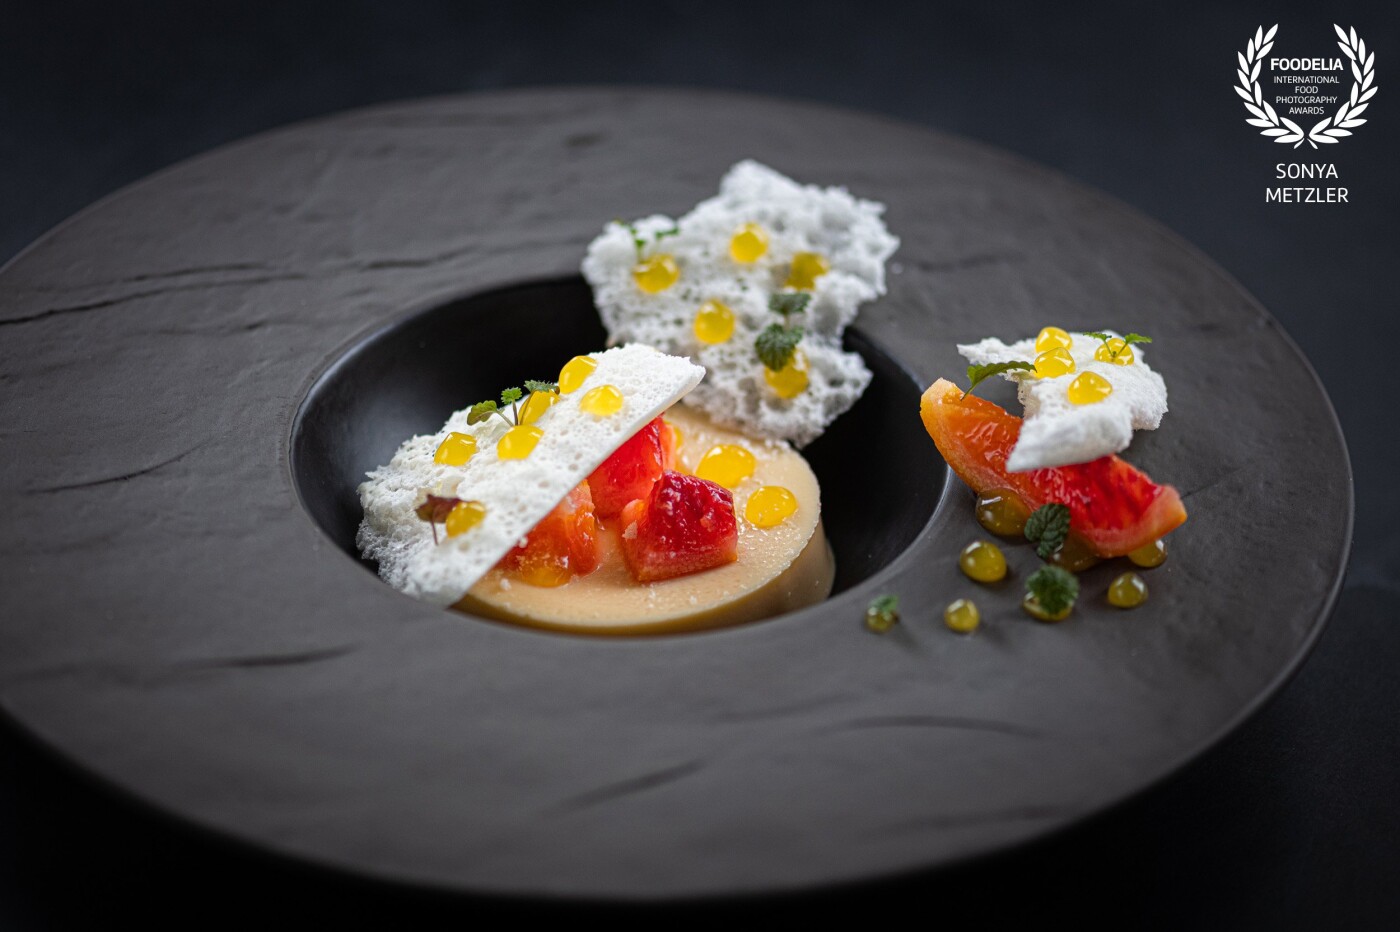 It's always a highlight to shoot Salut! 's beautiful desserts - Burnt Honey Crémeux<br />
By chef @big_trev88<br />
Restaurant - @salut.restaurant